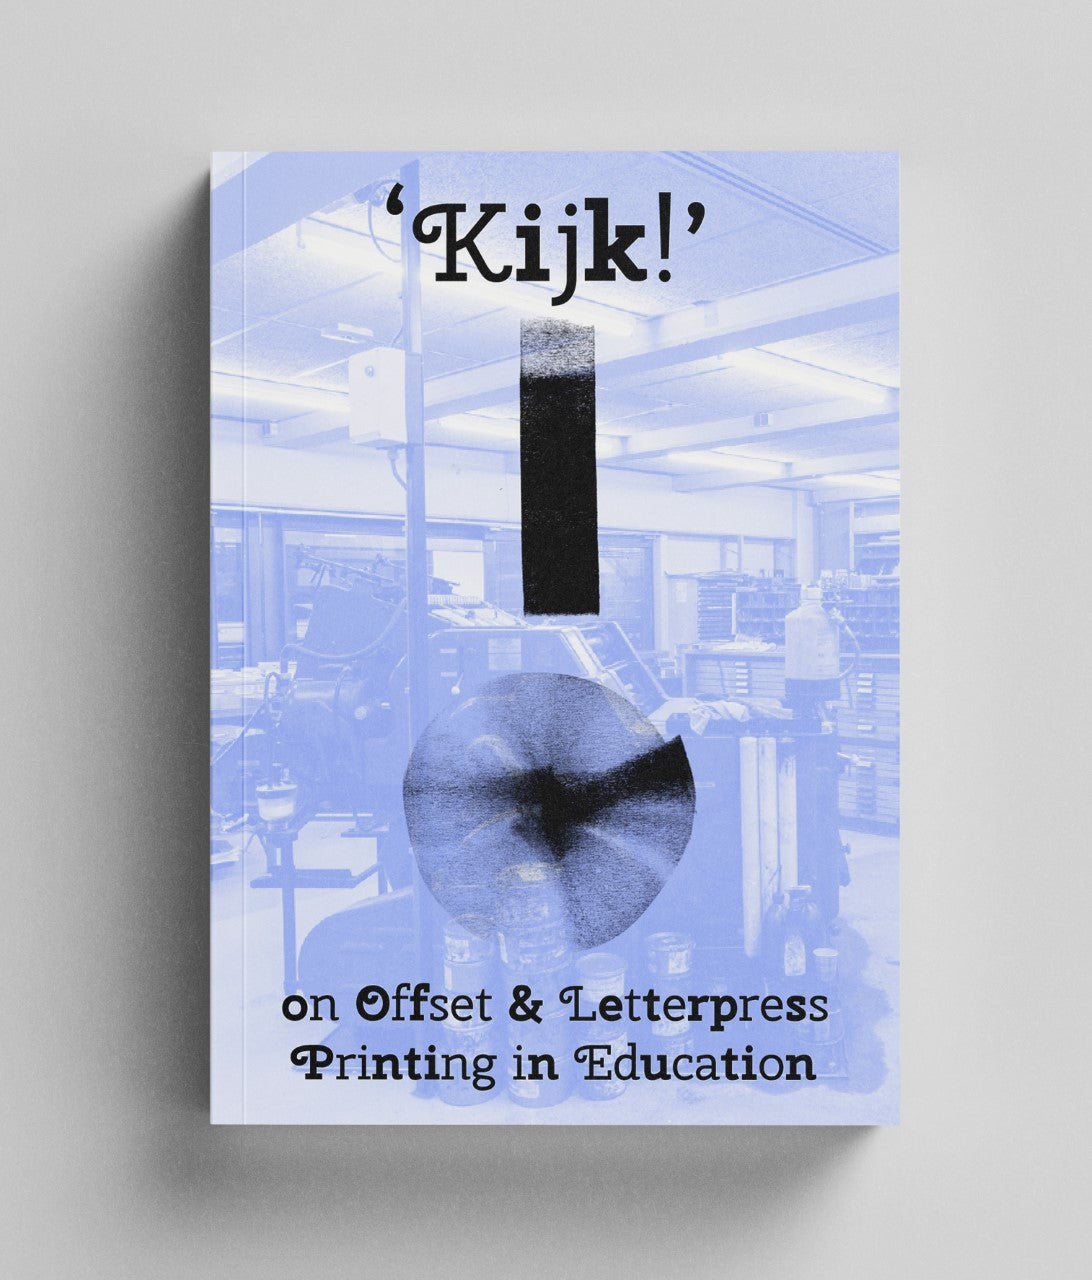 Kijk!: On Offset & Letterpress Printing in Education